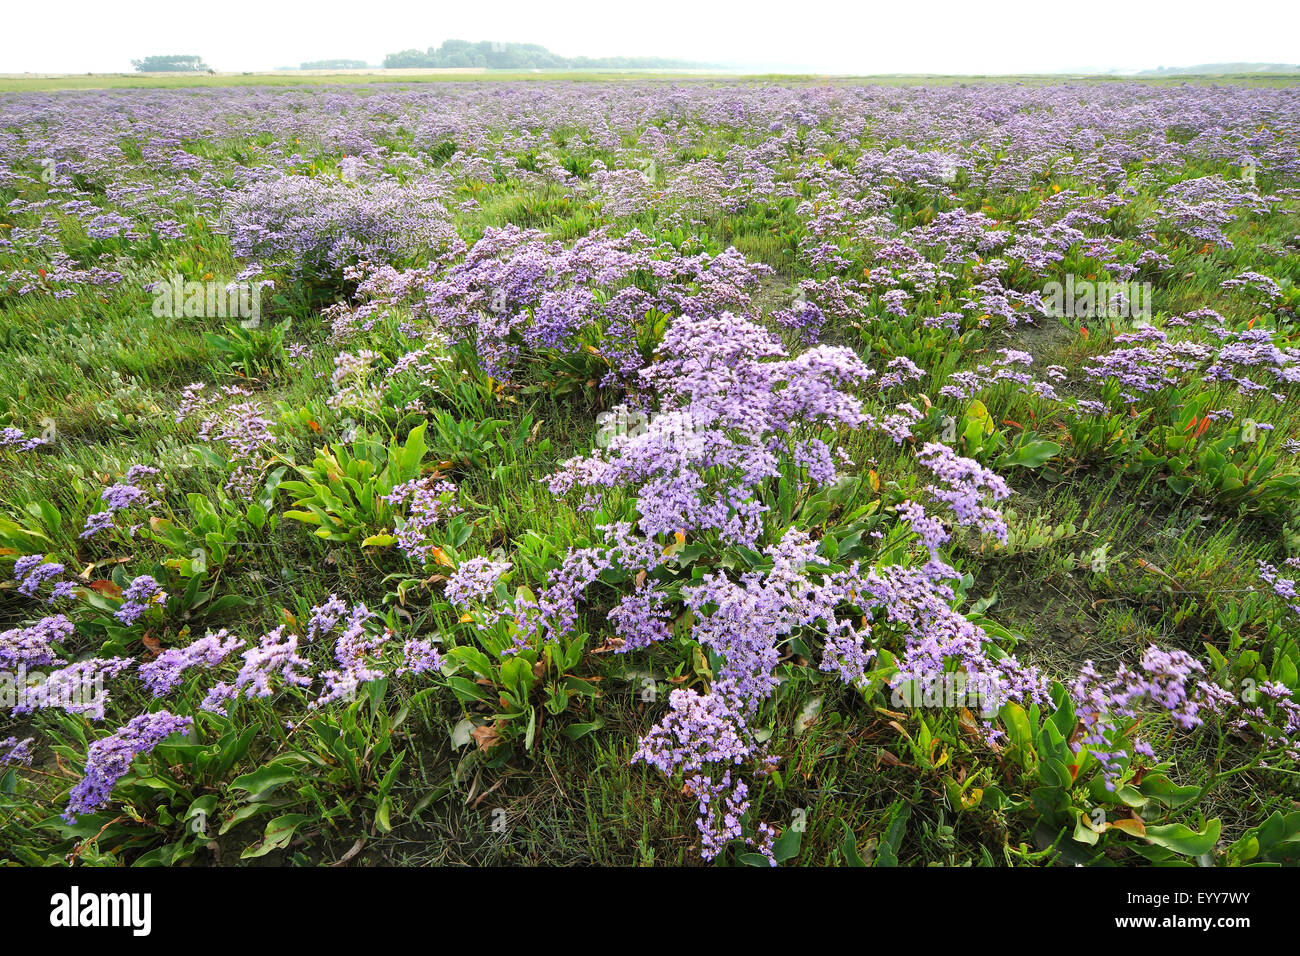 common sea-lavender, mediterranean sea-lavender (Limonium vulgare), large areal with flowering common sea-lavender, Belgium, Zwin nature reserve Stock Photo